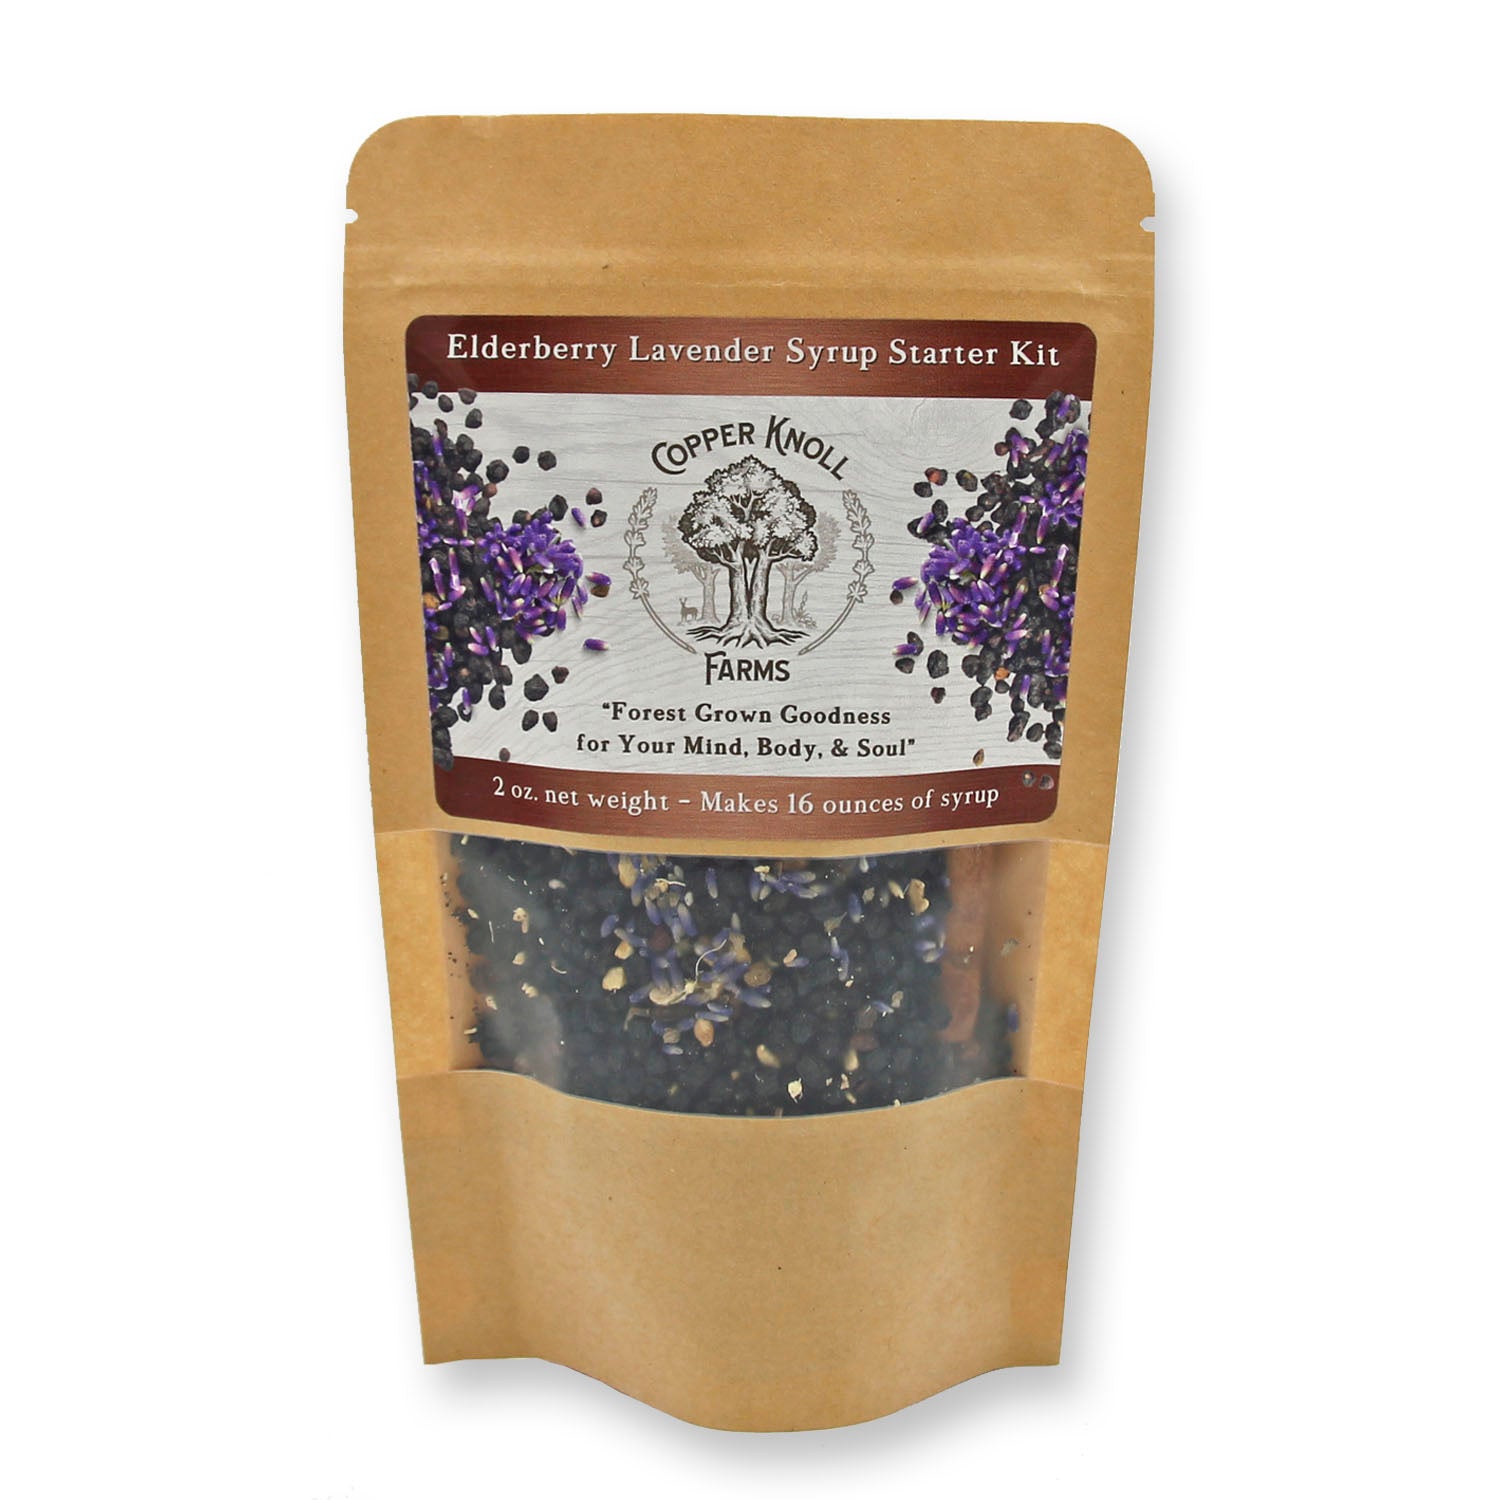 Elderberry Lavender Syrup Starter Kit